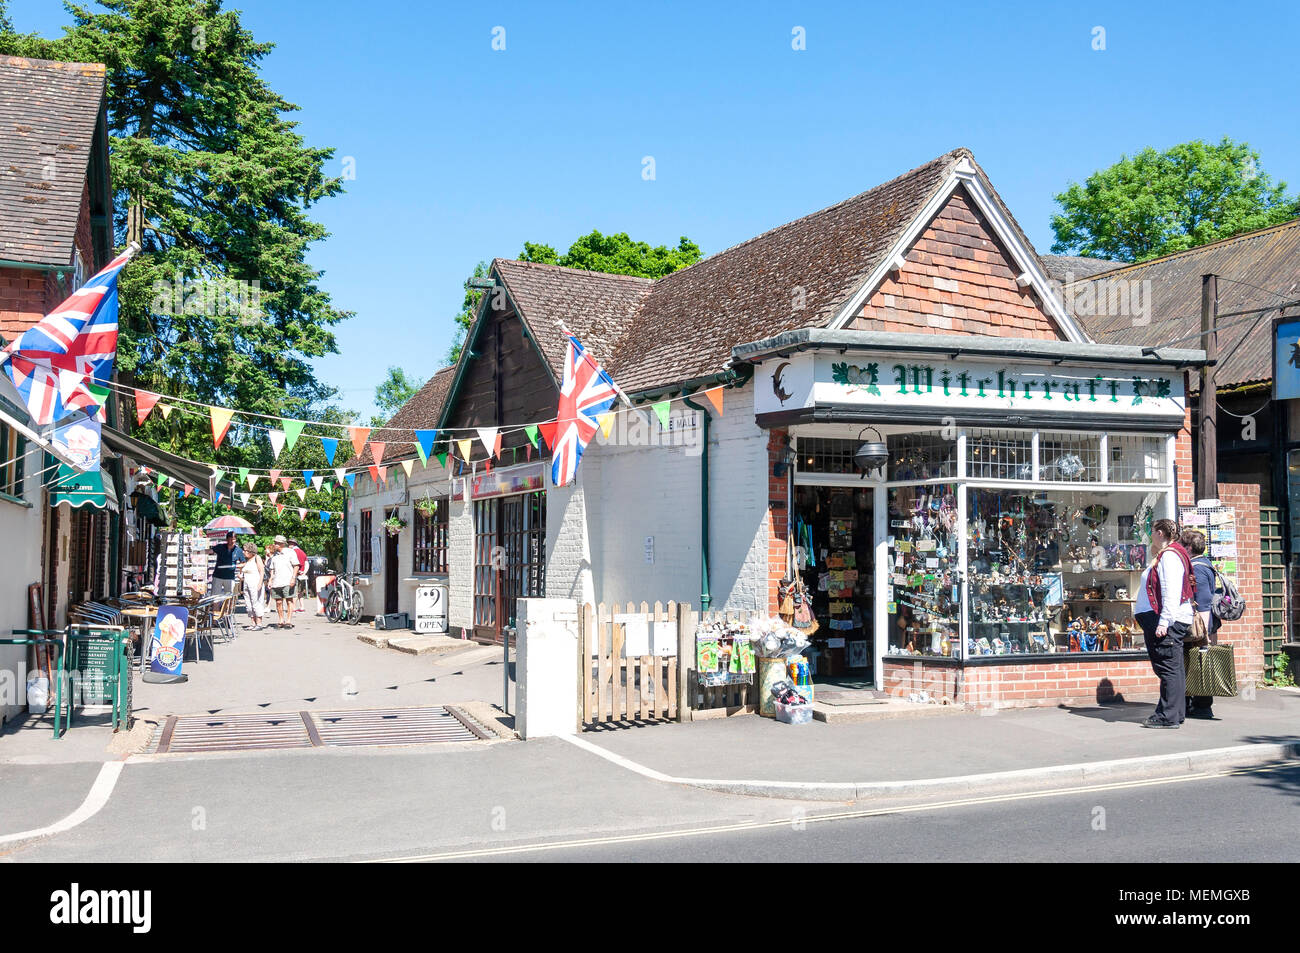 Boutique de sorcellerie, le Mall, Ringwood Road, Burley, Hampshire, Angleterre, Royaume-Uni Banque D'Images